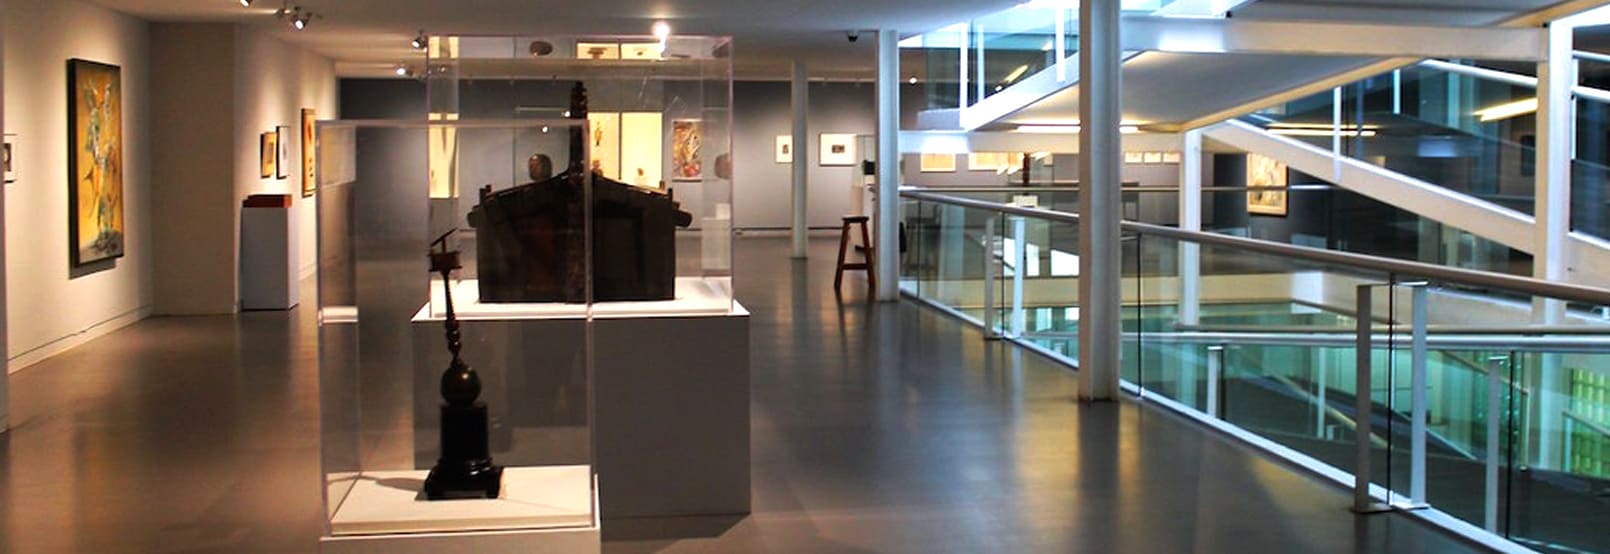 MUSEO DE ARTE CARRILLO GIL1